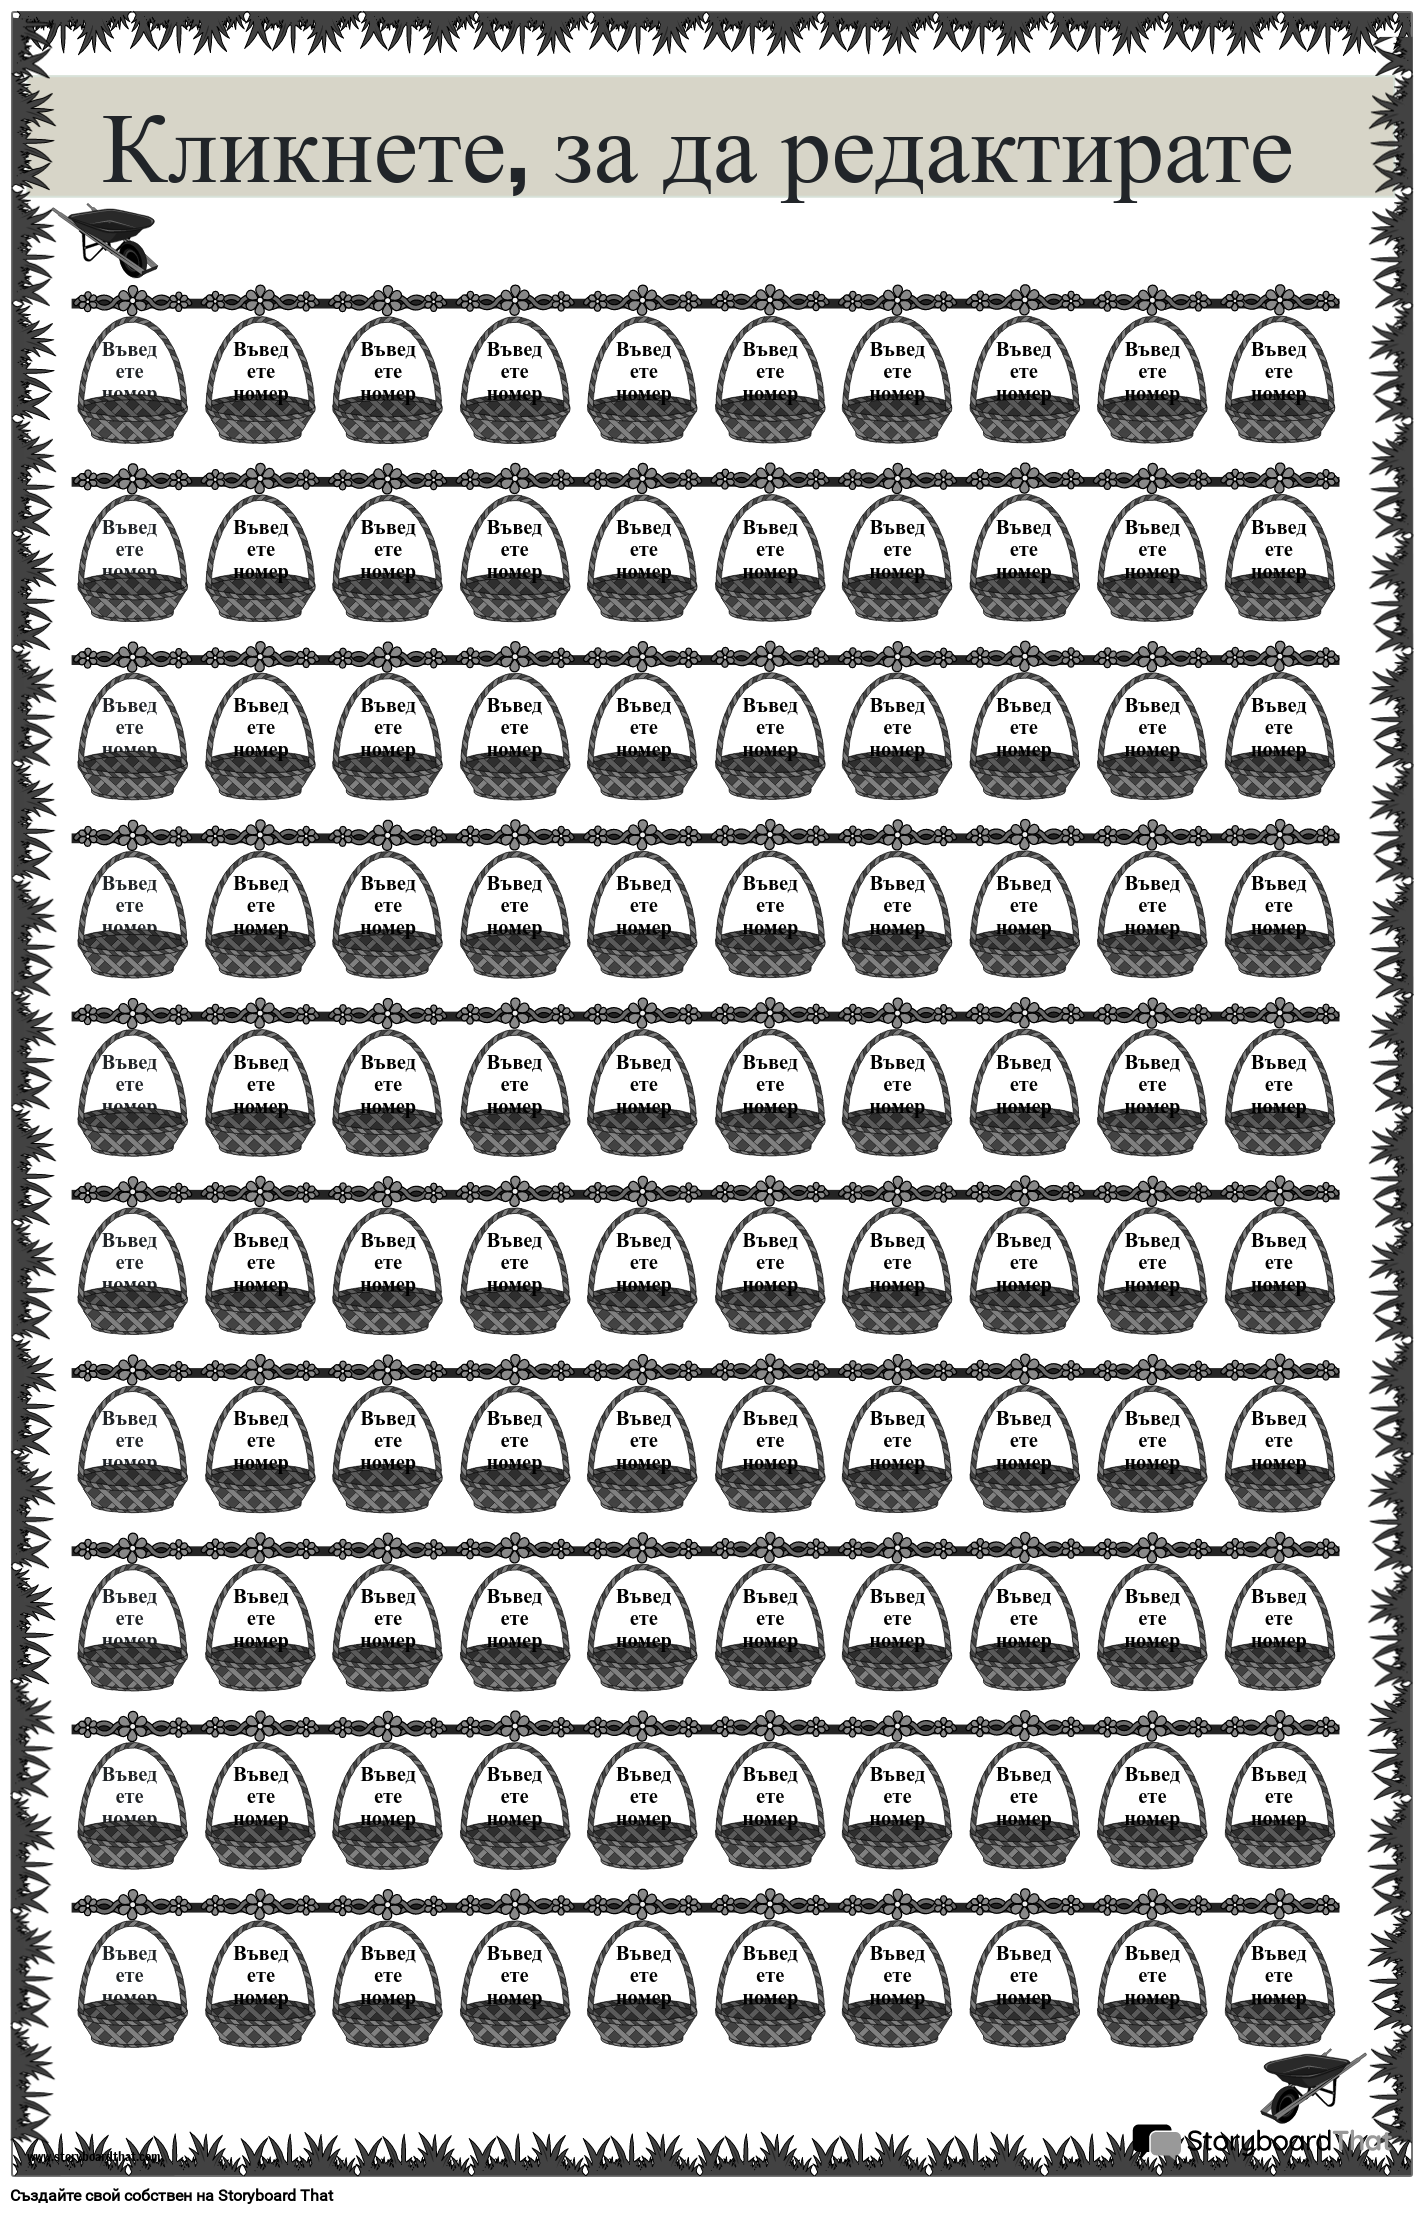 Постер с редове с числа и кошница Черно-бяло